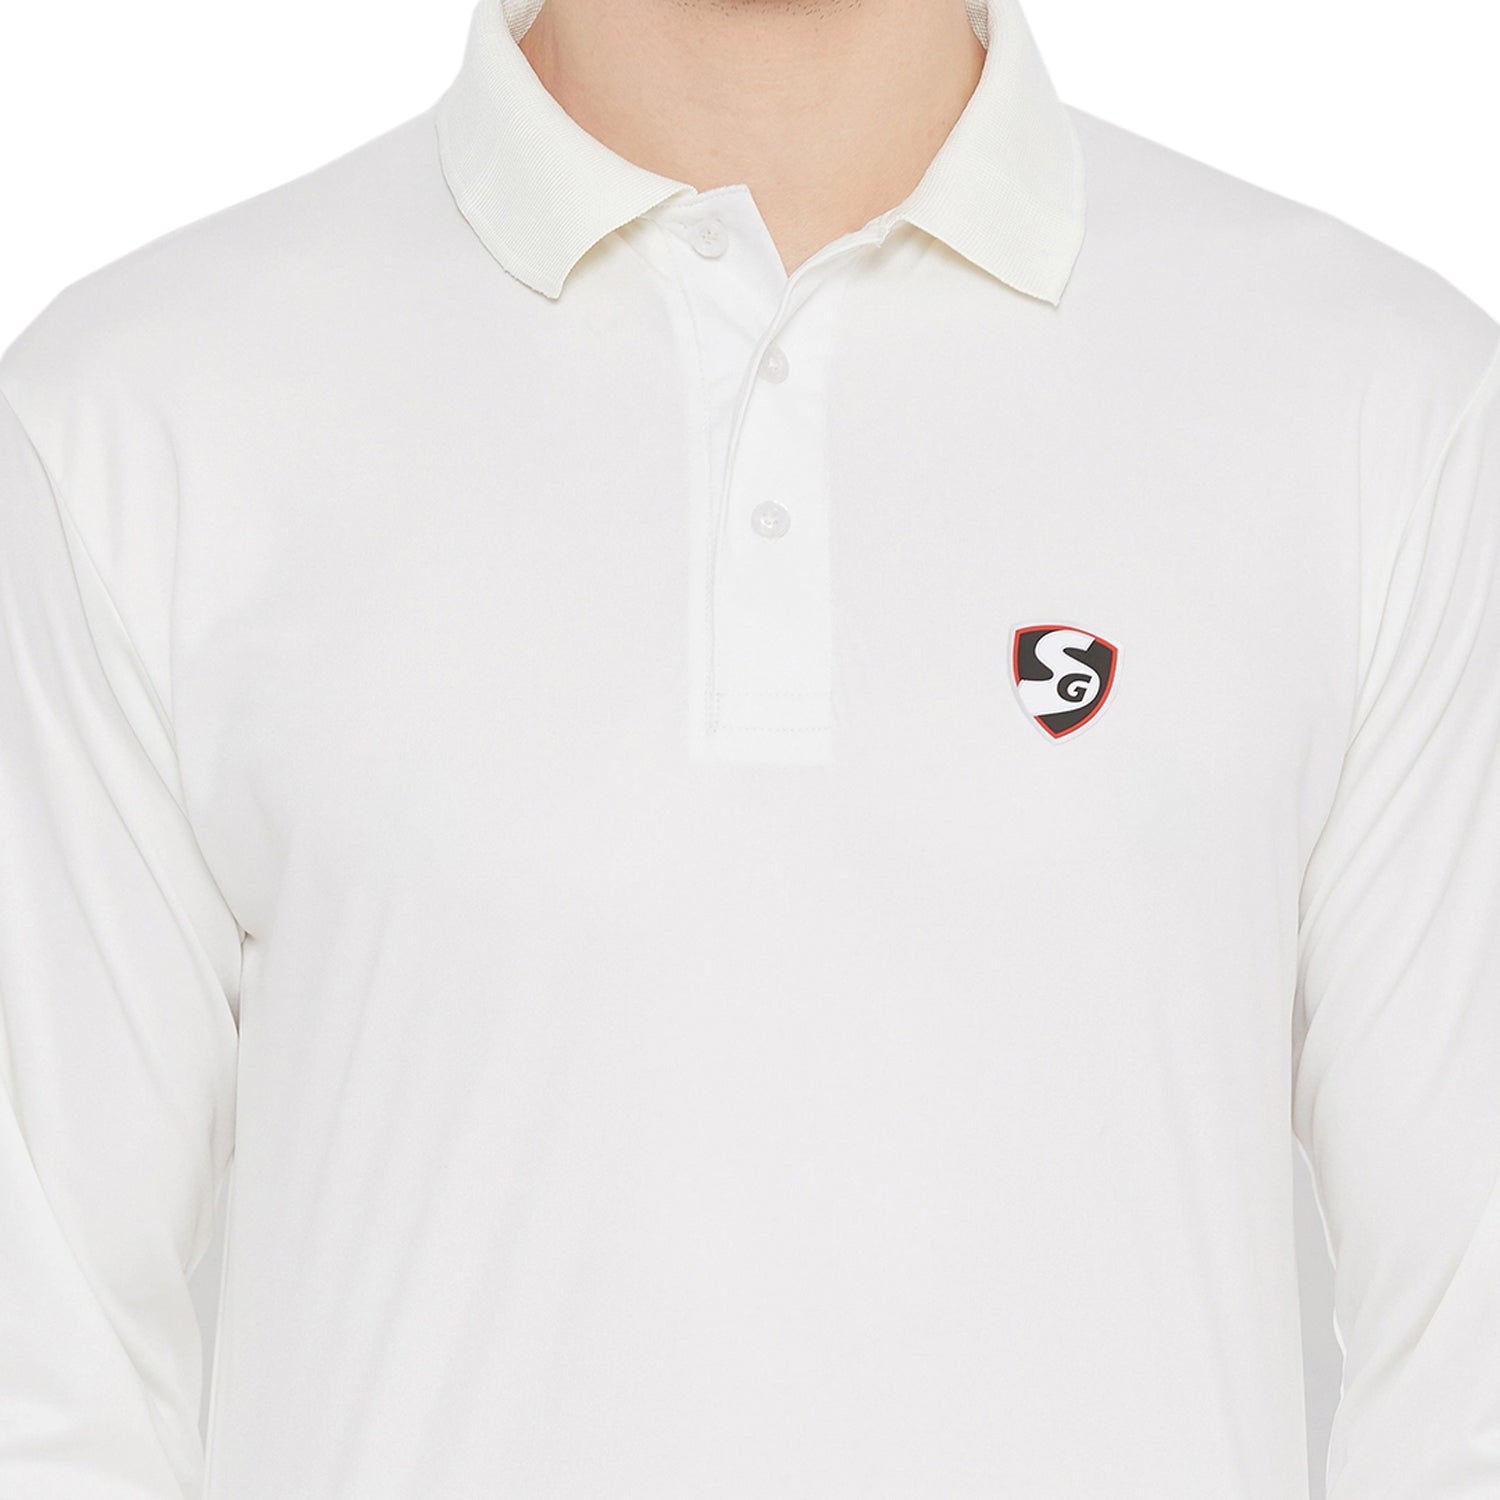 SG Club Full Sleeves Cricket T-shirts for Juniors - Best Price online Prokicksports.com